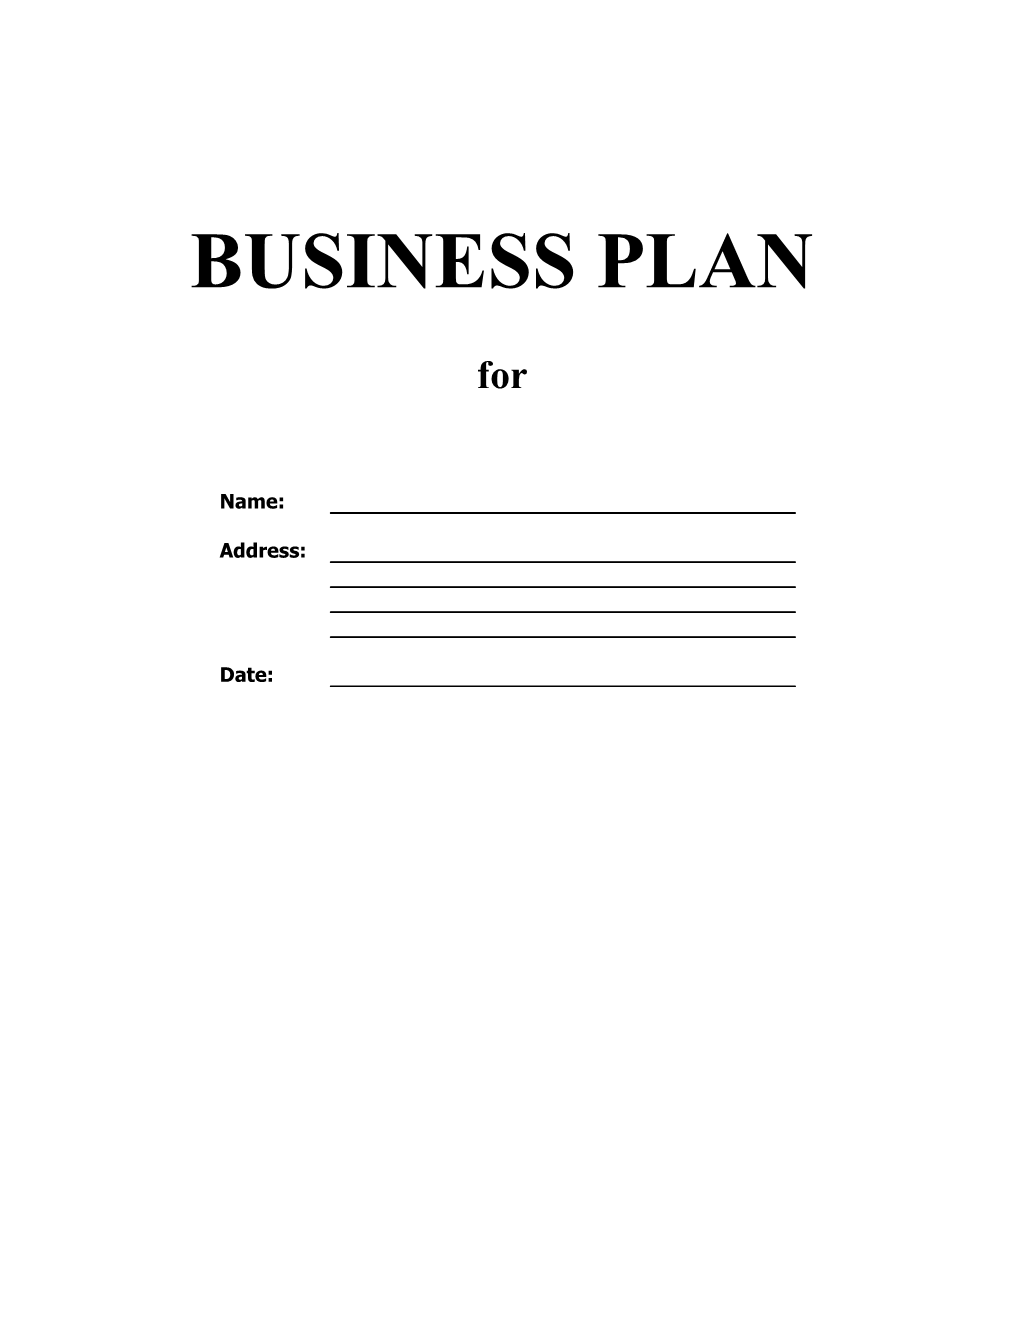 Teagasc Business Plan Template